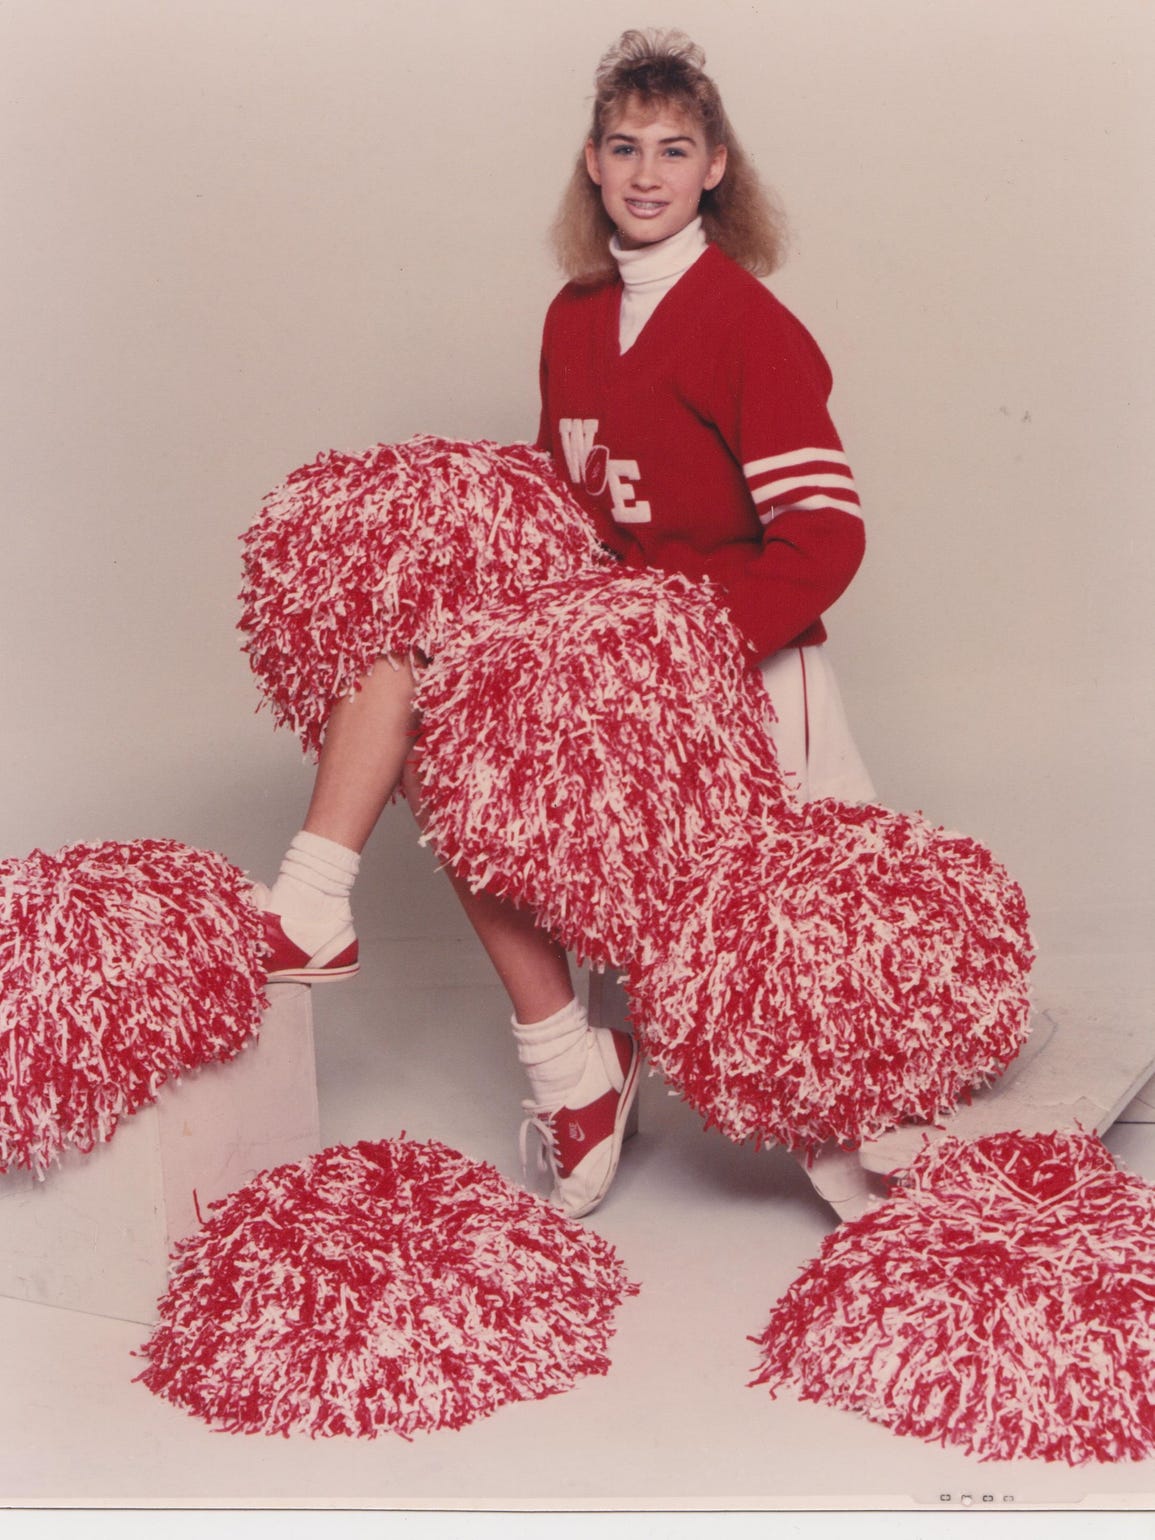 Heidi Wolfe was a high school cheerleader in the late